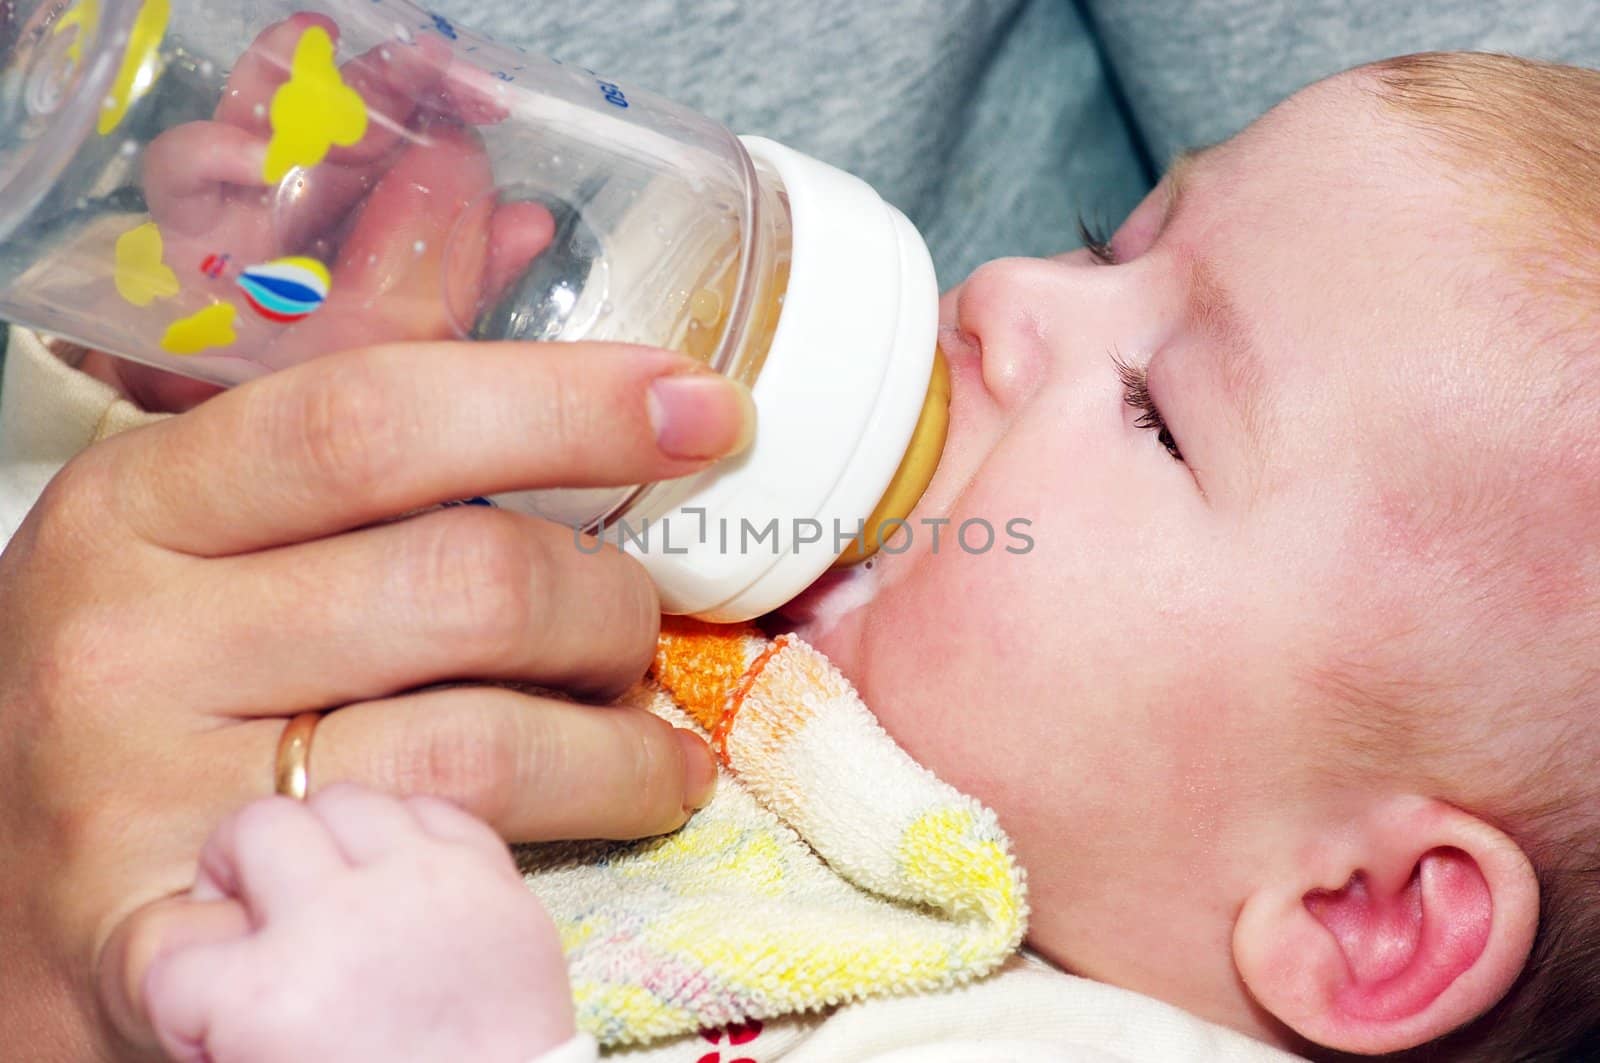 Newborn eating by dolnikow